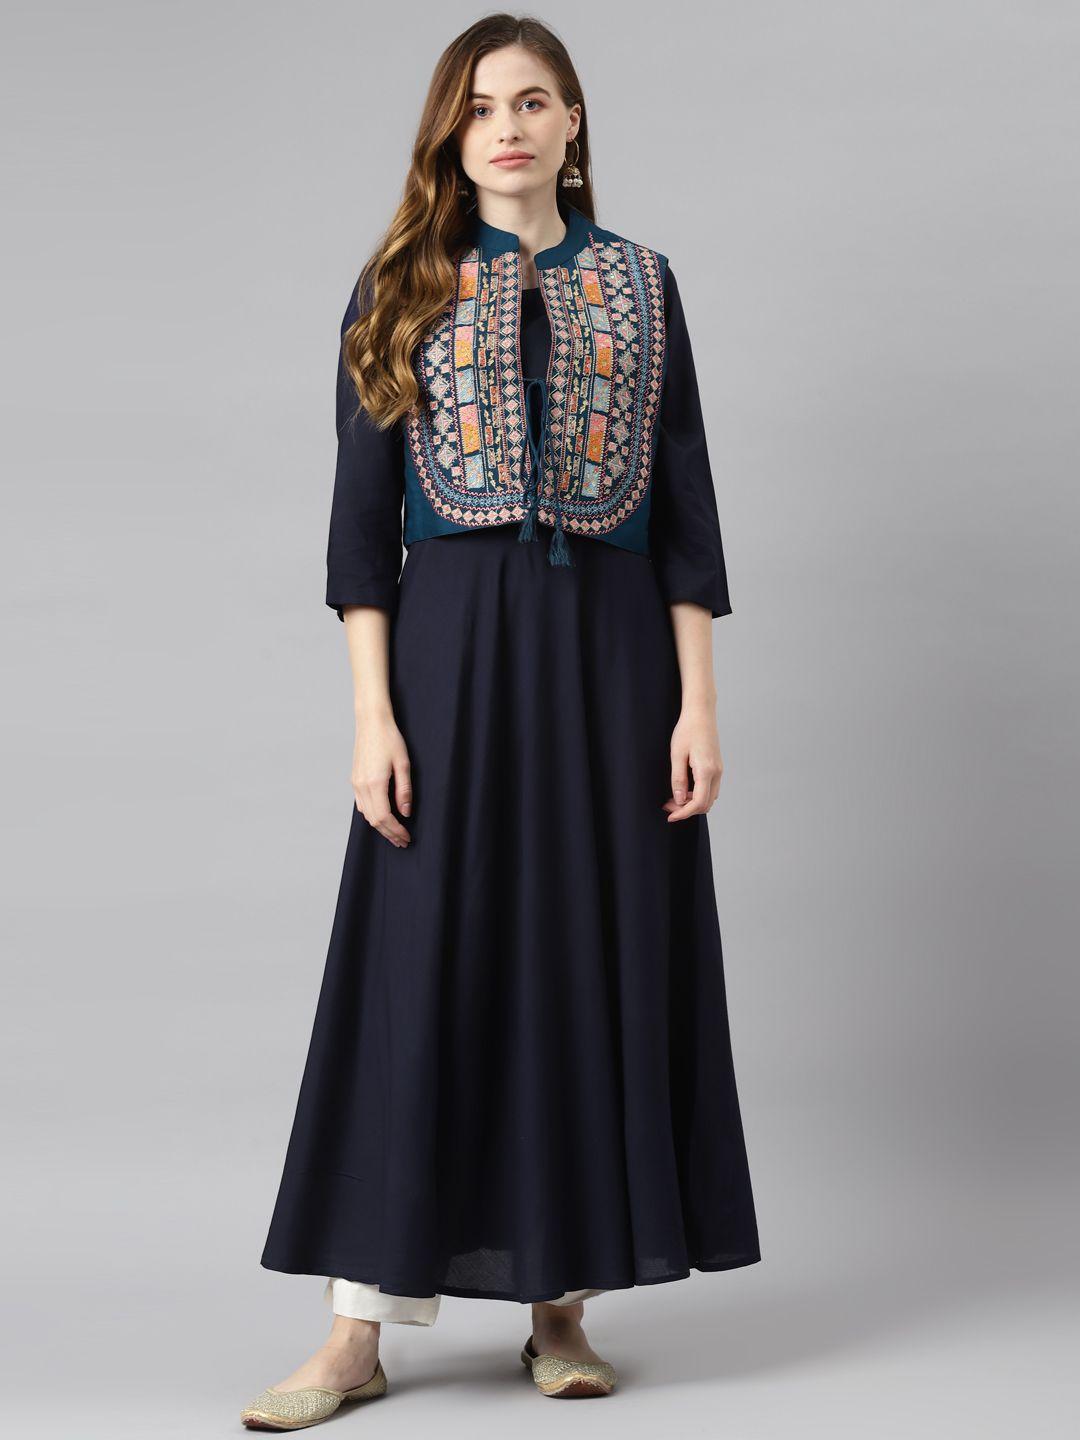 readiprint fashions women navy blue geometric embroidered kurta with jacket